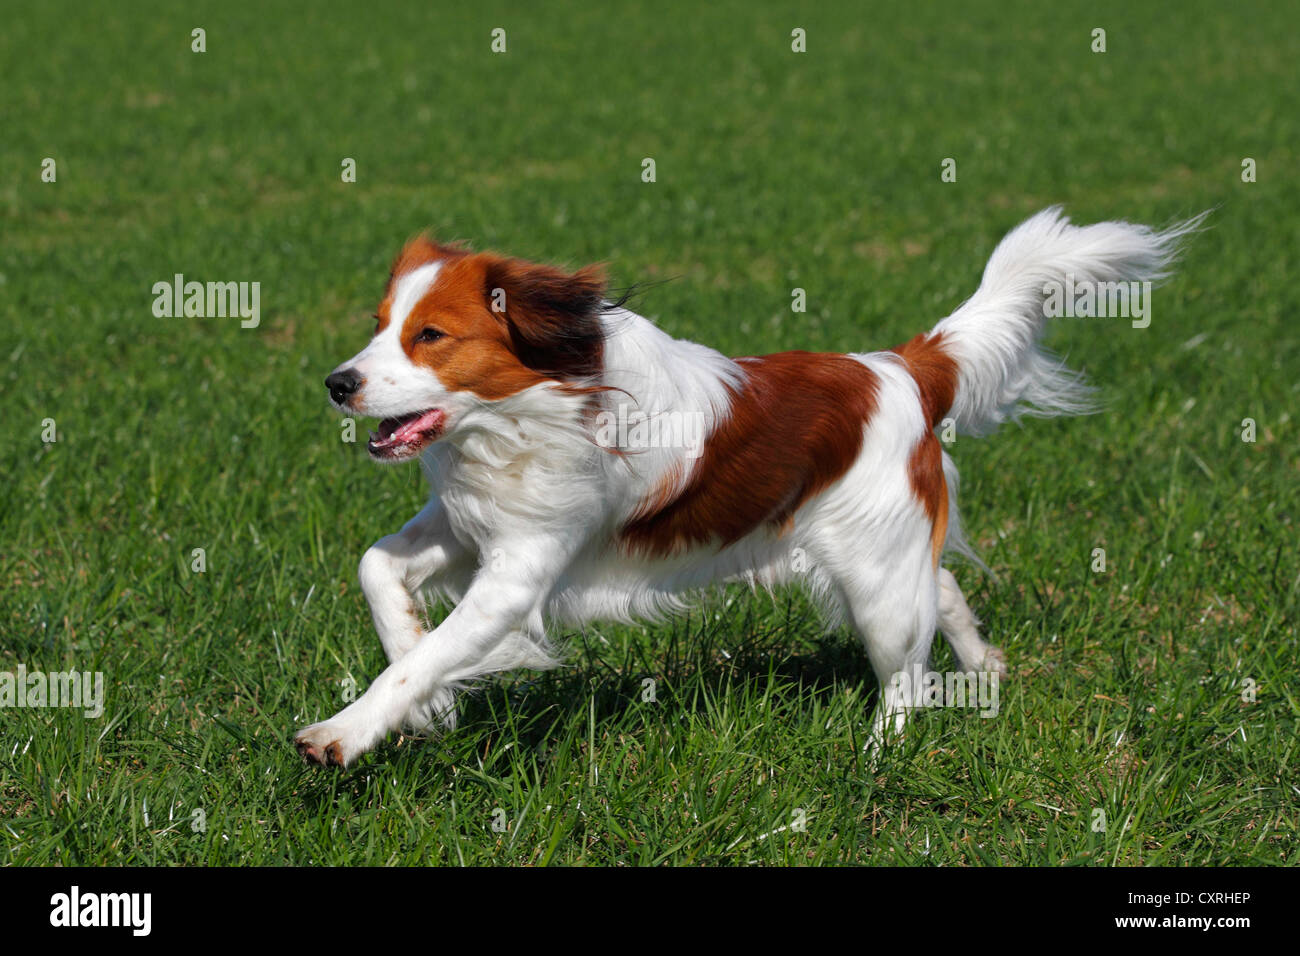 Kooikerhondje or Kooiker Hound (Canis lupus familiaris), young male dog running across a meadow Stock Photo